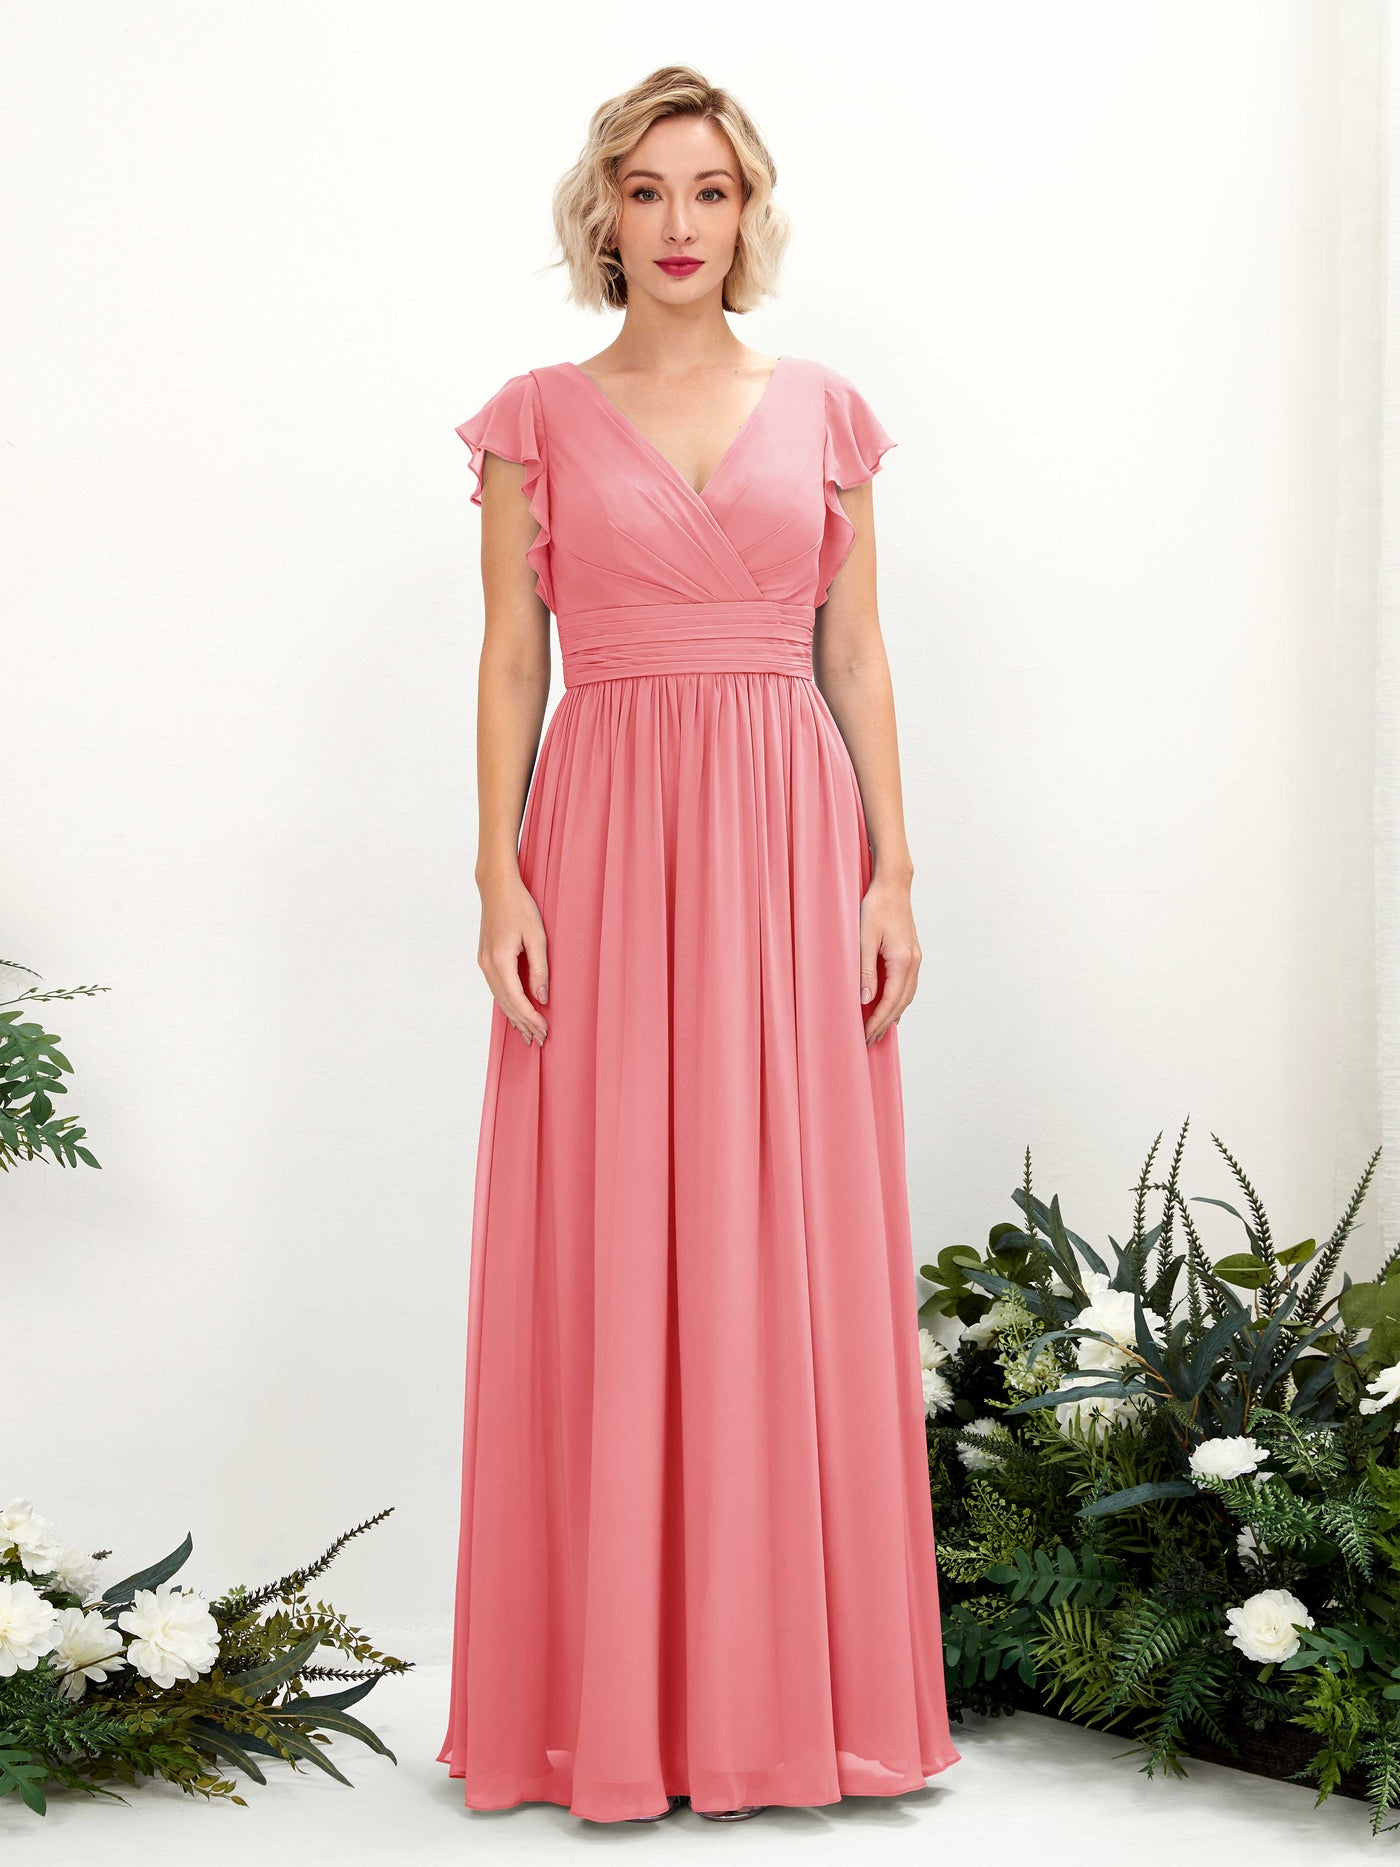 Coral Pink Bridesmaid Dresses Bridesmaid Dress A-line Chiffon V-neck Full Length Short Sleeves Wedding Party Dress (81222730)#color_coral-pink